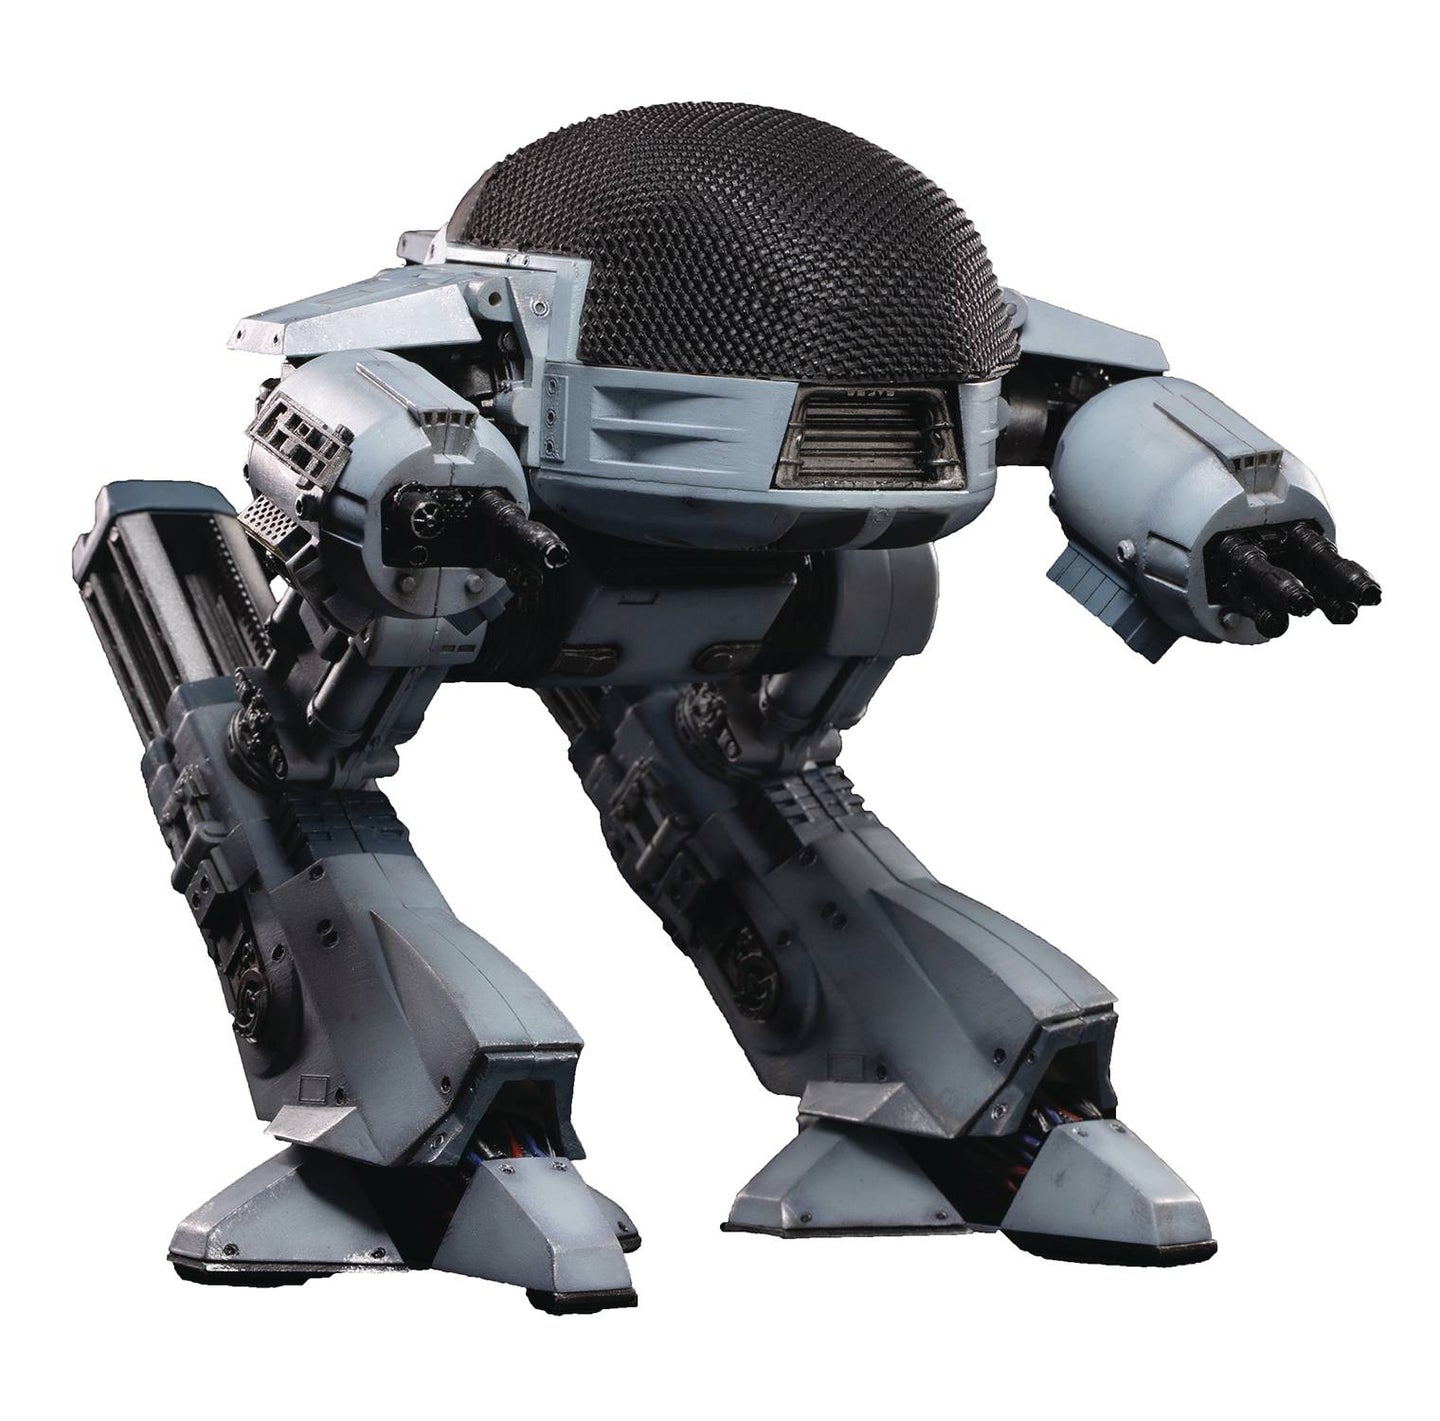 Robocop ED209 PX 1/18 Scale Figure With Sound